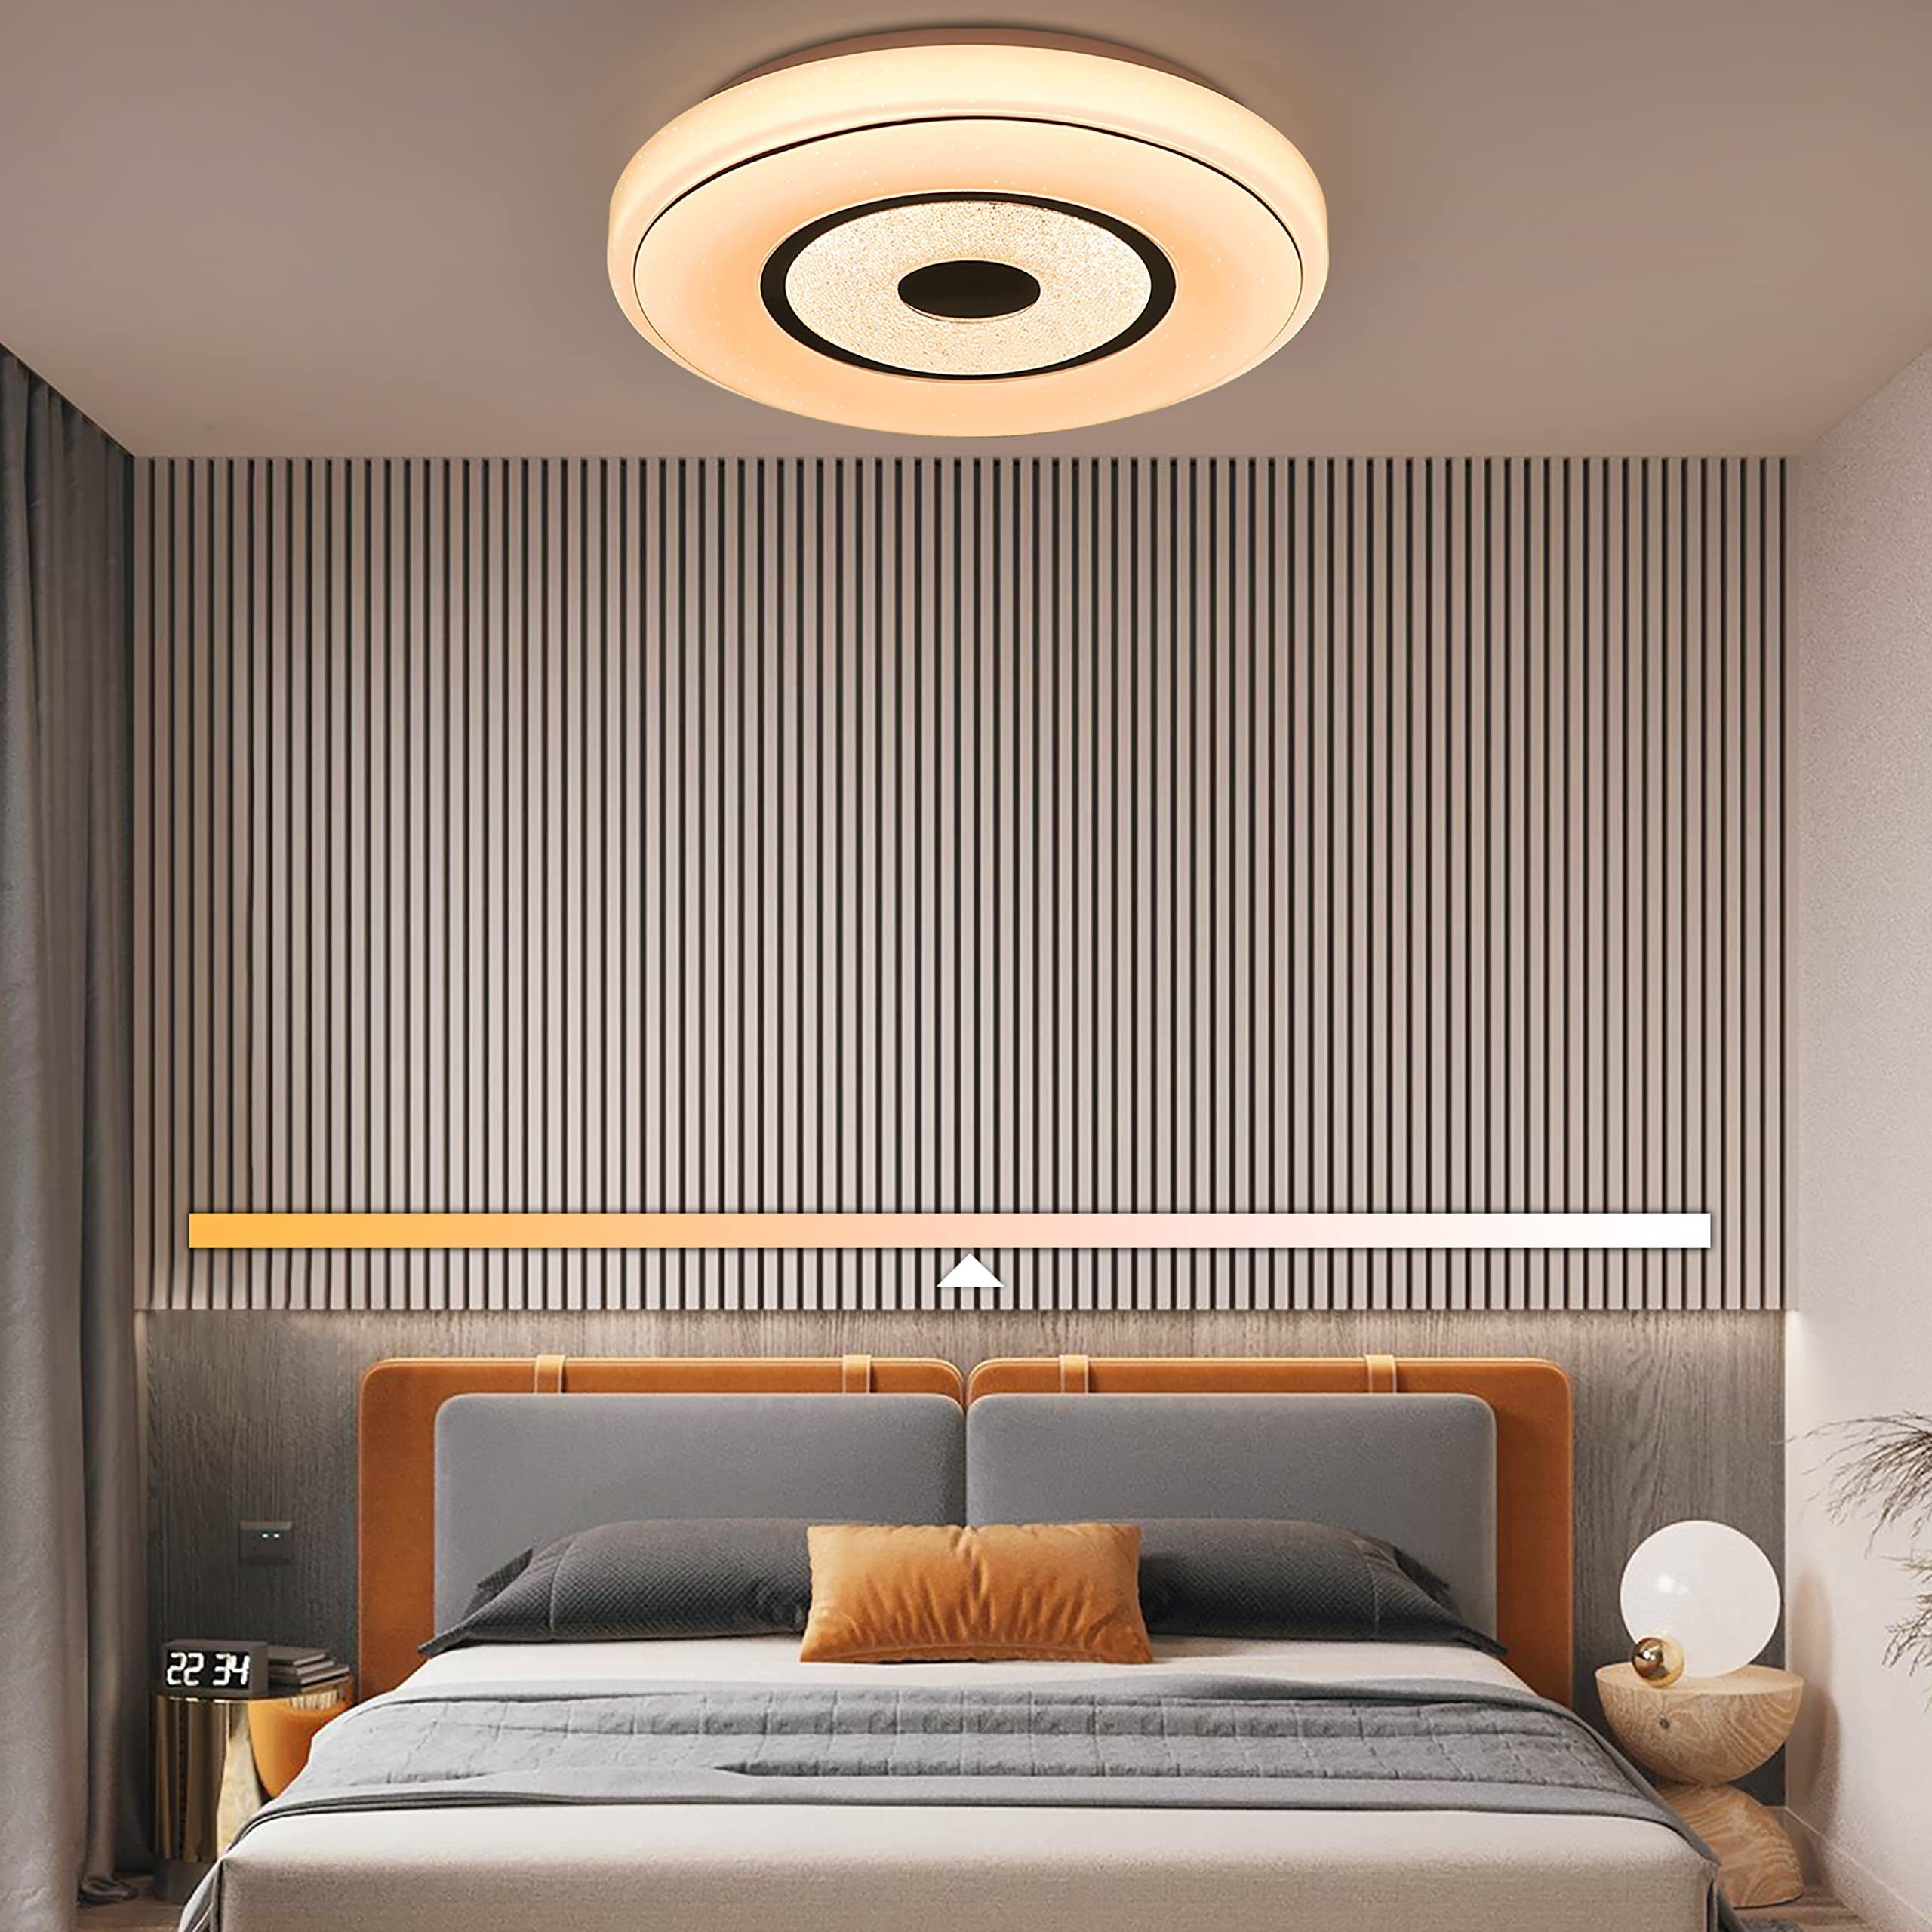 Nettlife LED Deckenleuchte Dimmbar 18W integriert, CCT Küche Ø30CM Schlafzimmer, fest Fernbedienung/Wandschalter LED für